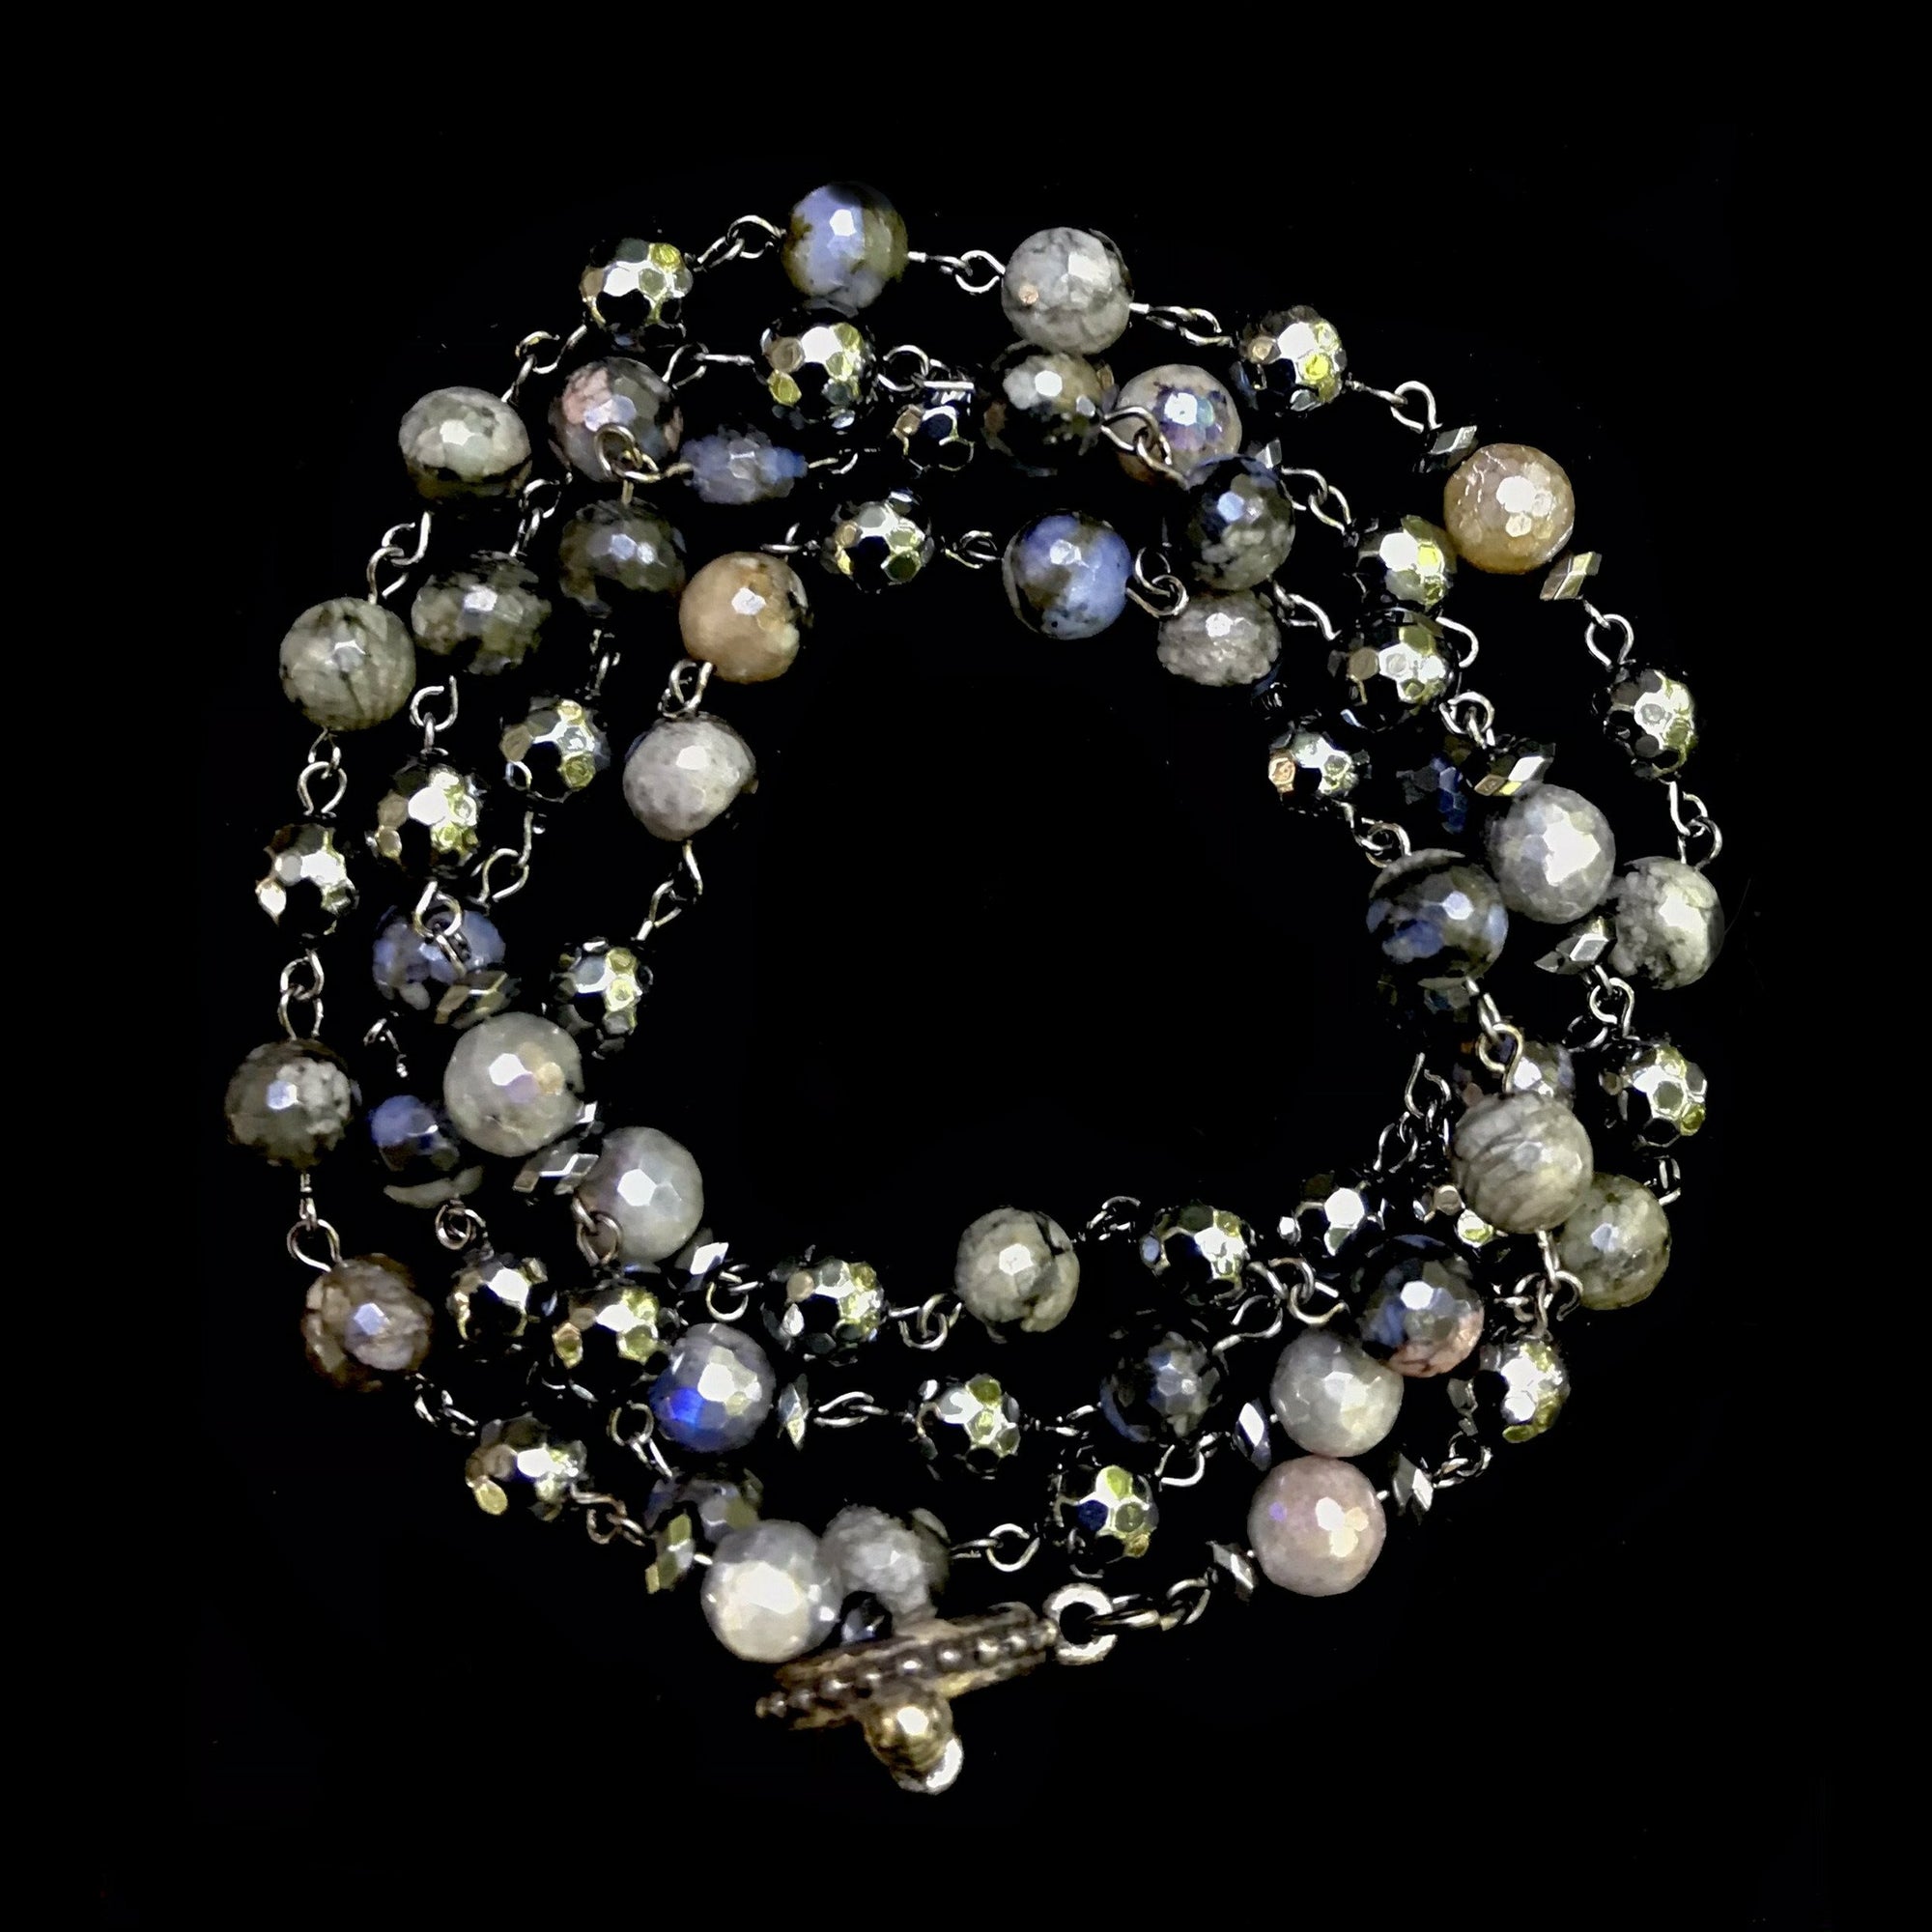 Galaxy Mix Wrap  Necklace / Bracelet  by Whispering Goddess